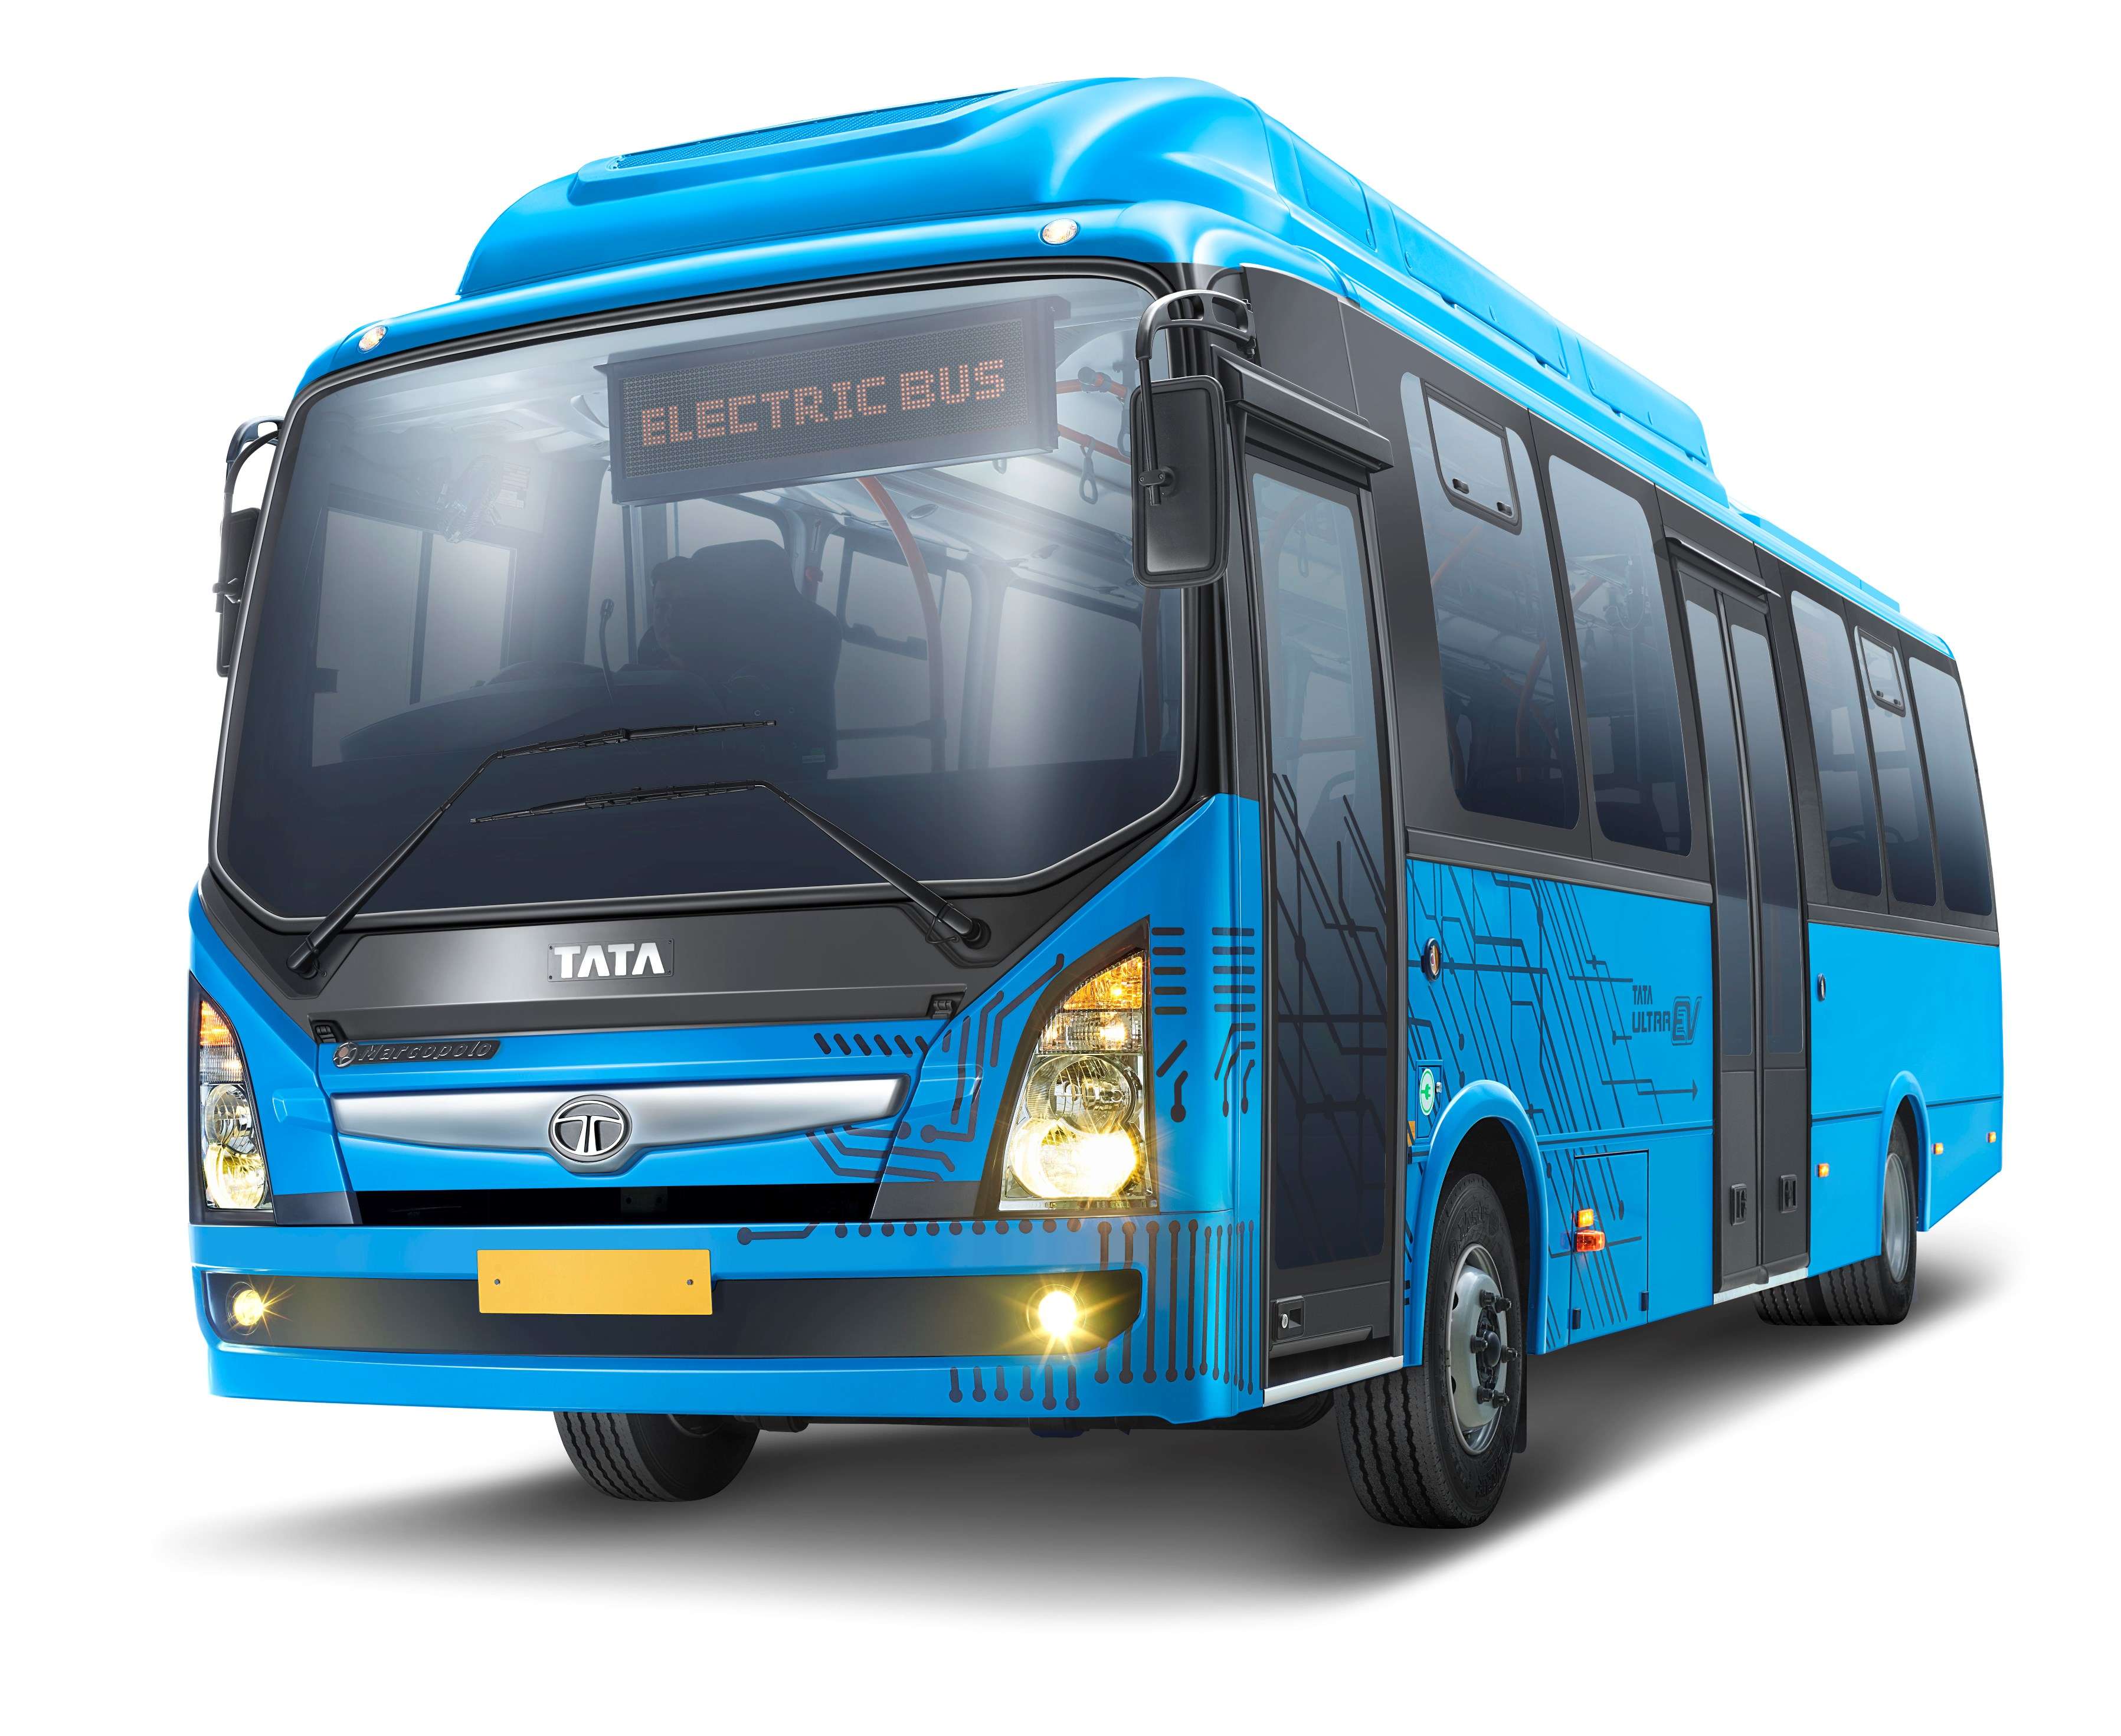 Volvo bus price in india 2020